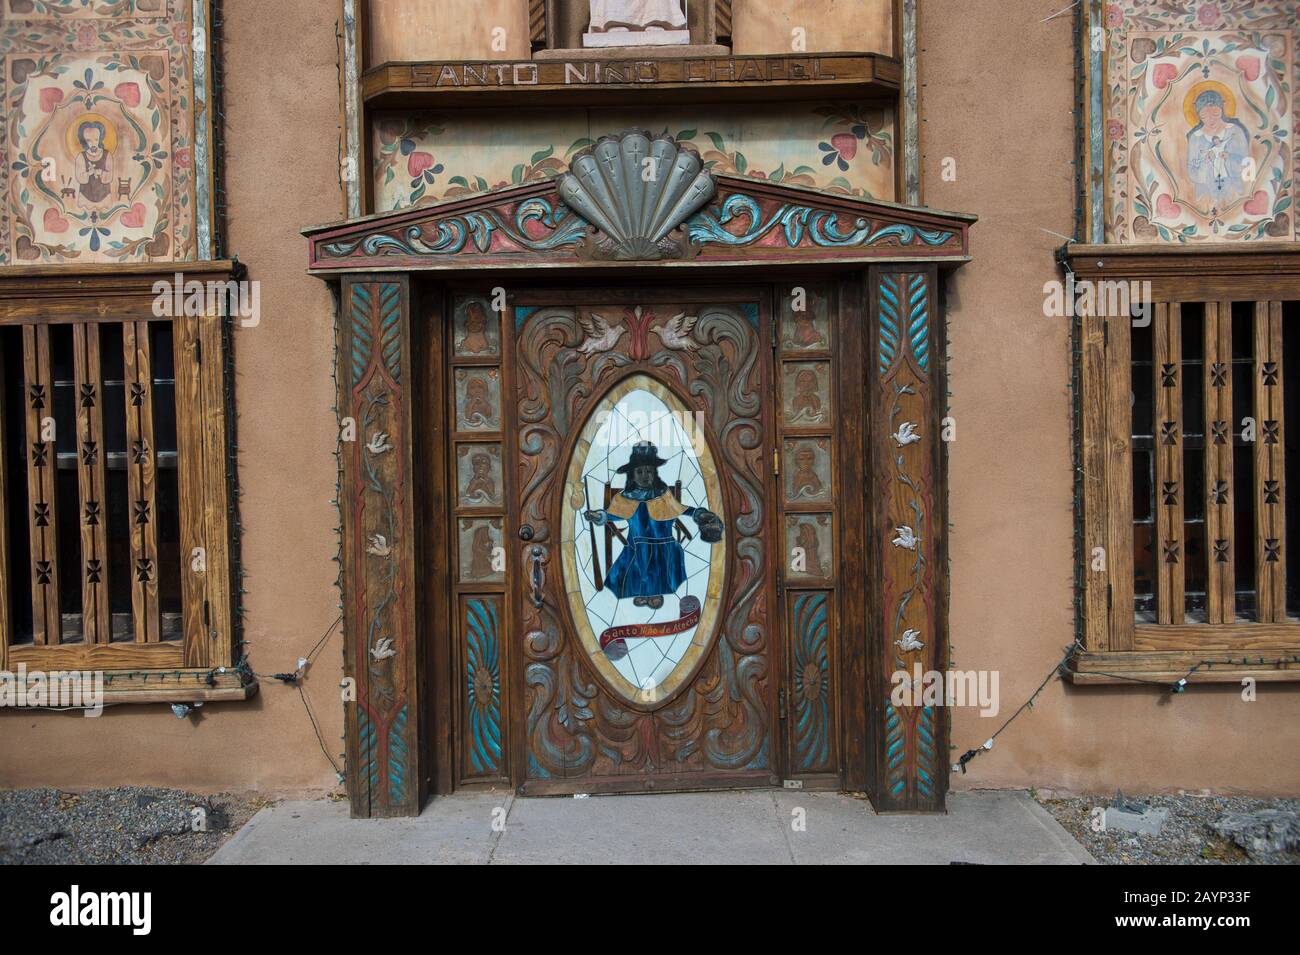 The front door of the chapel of Santo Nino de Atocha at El Santuario de Chimayo in the small community of El Potrero just outside of Chimayo, New Mexi Stock Photo